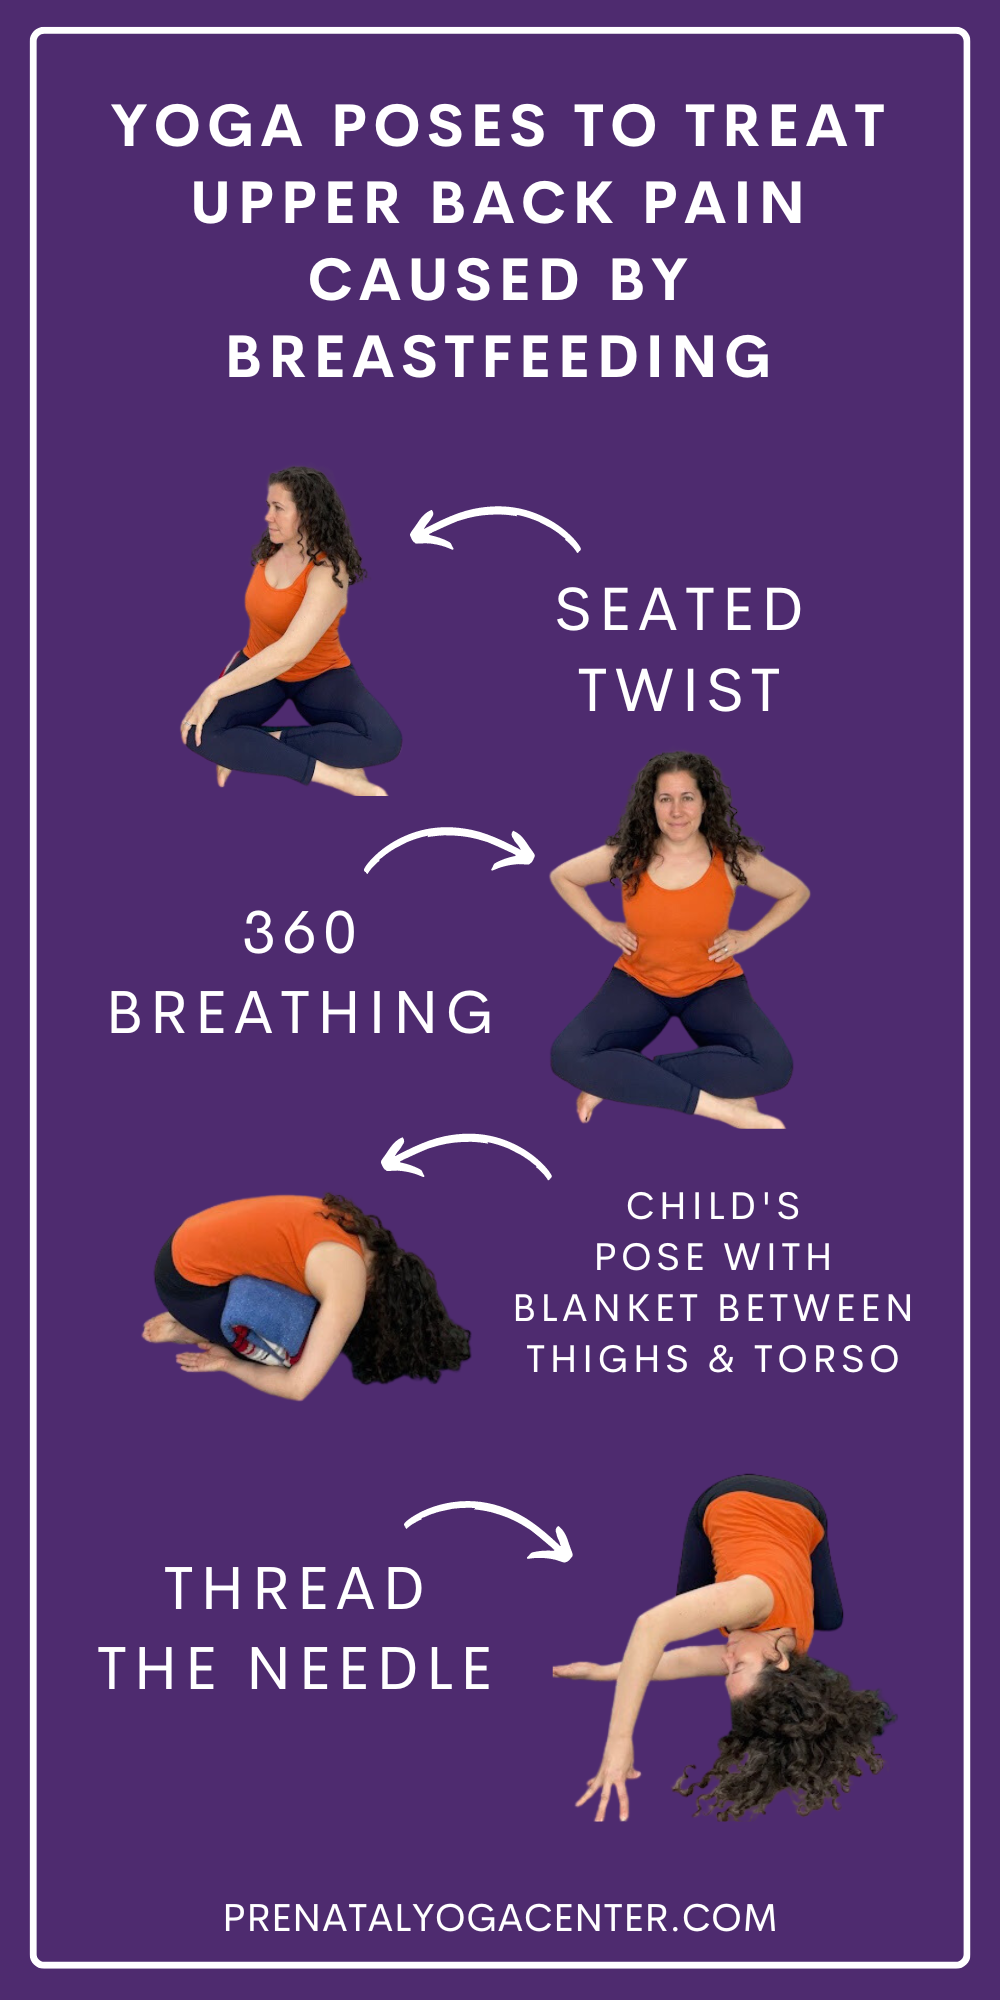 10 Yoga Poses for Postpartum Core Strength, Part 1 - Spoiled Yogi